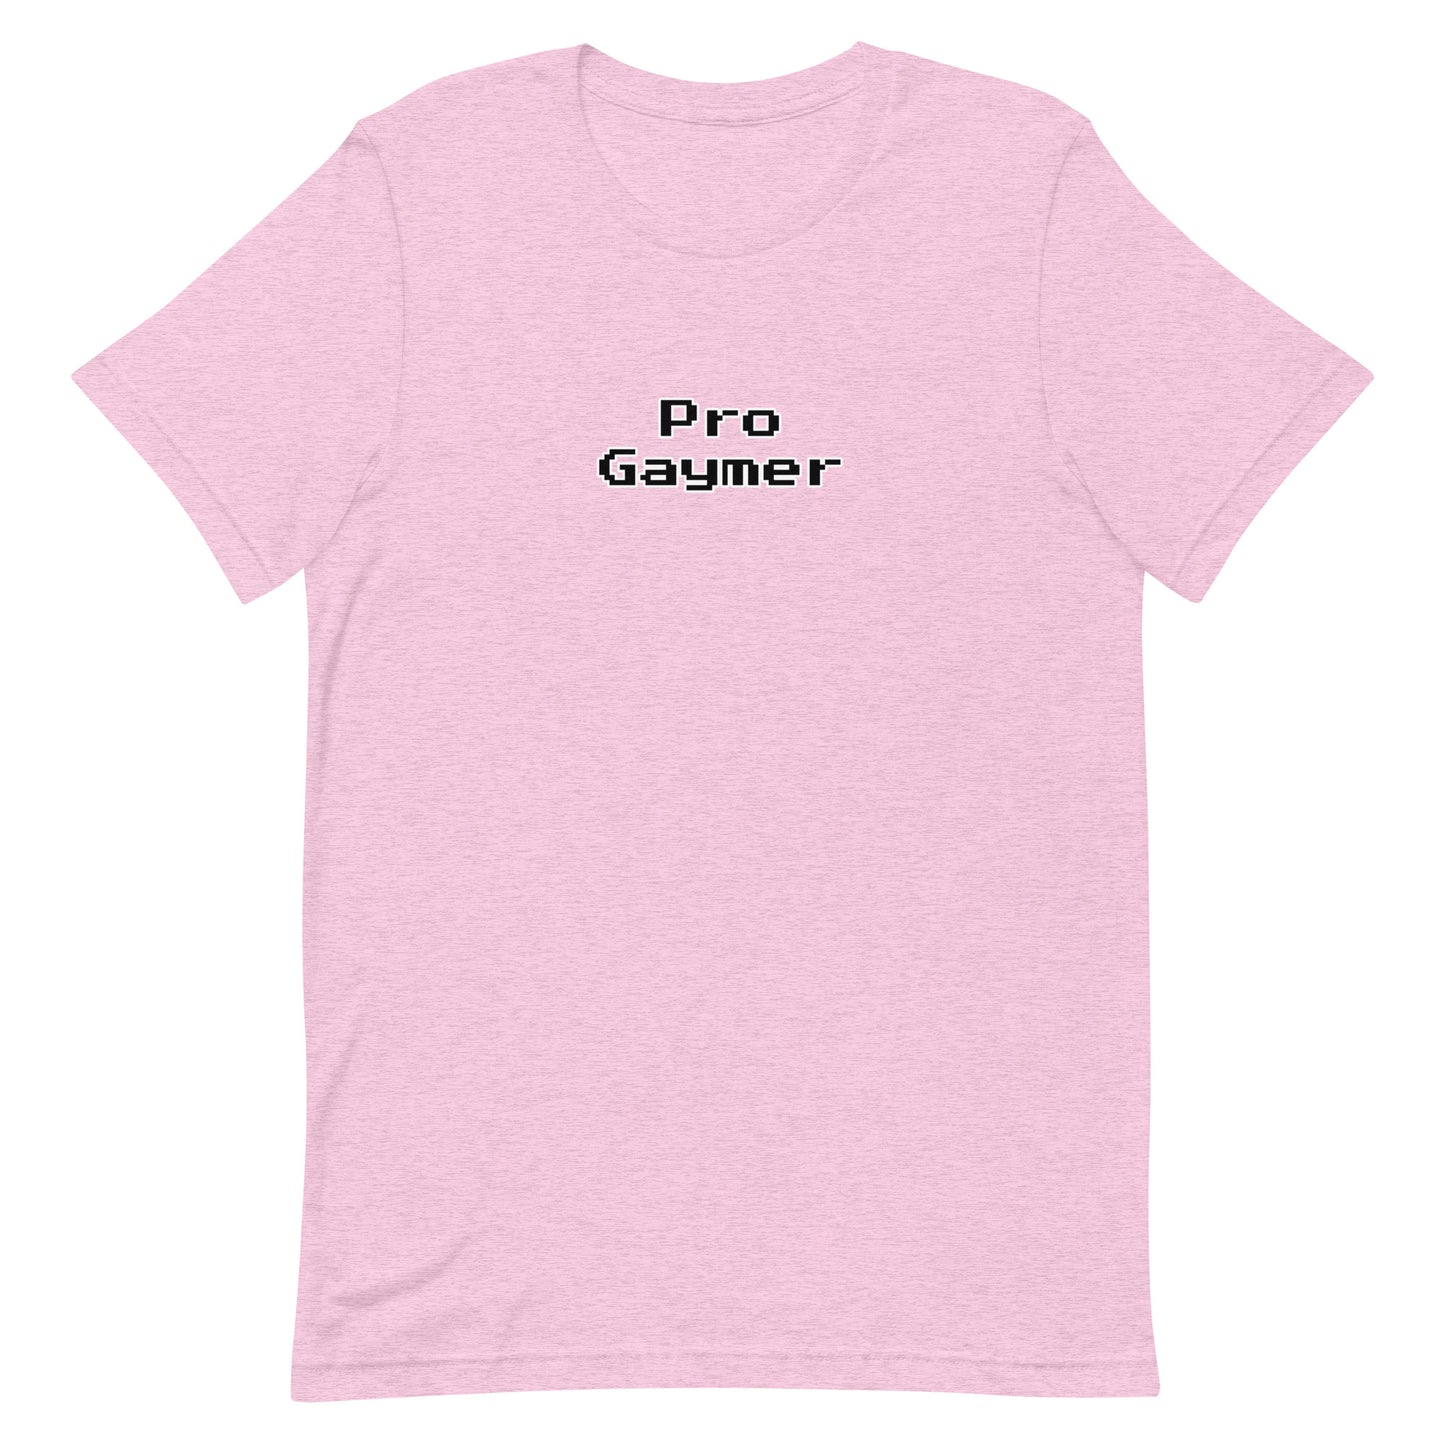 Pro Gaymer - T-Shirt (B) - Heathered, color blends